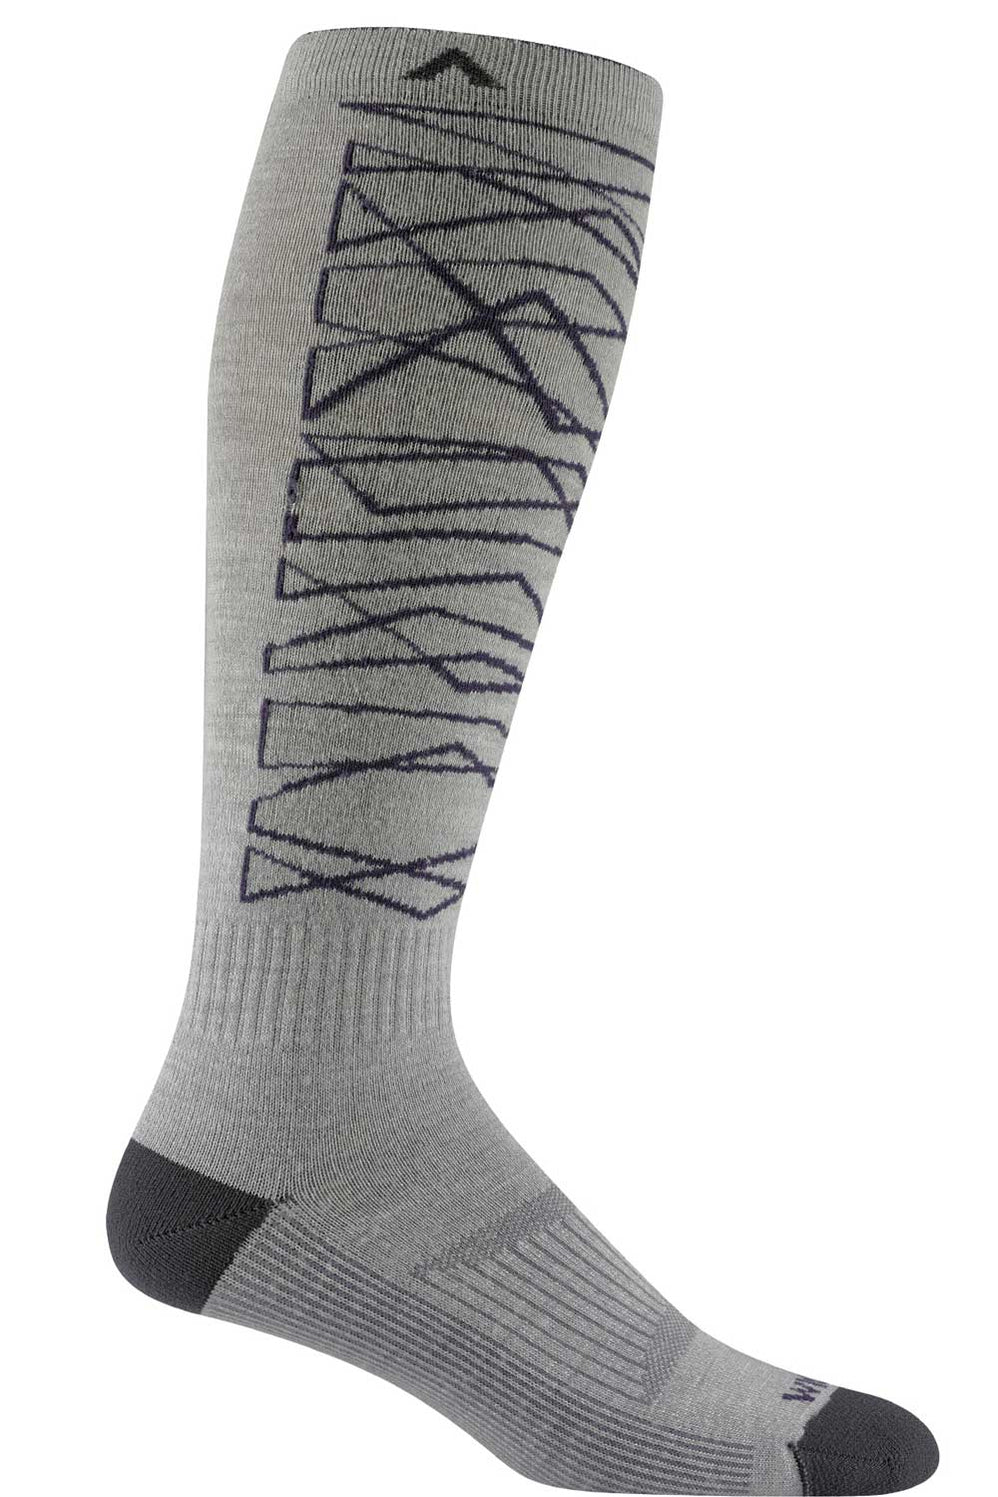 Wigwam Ski Socks | Ski & Board Socks from Wigwam — Baselayer Ltd